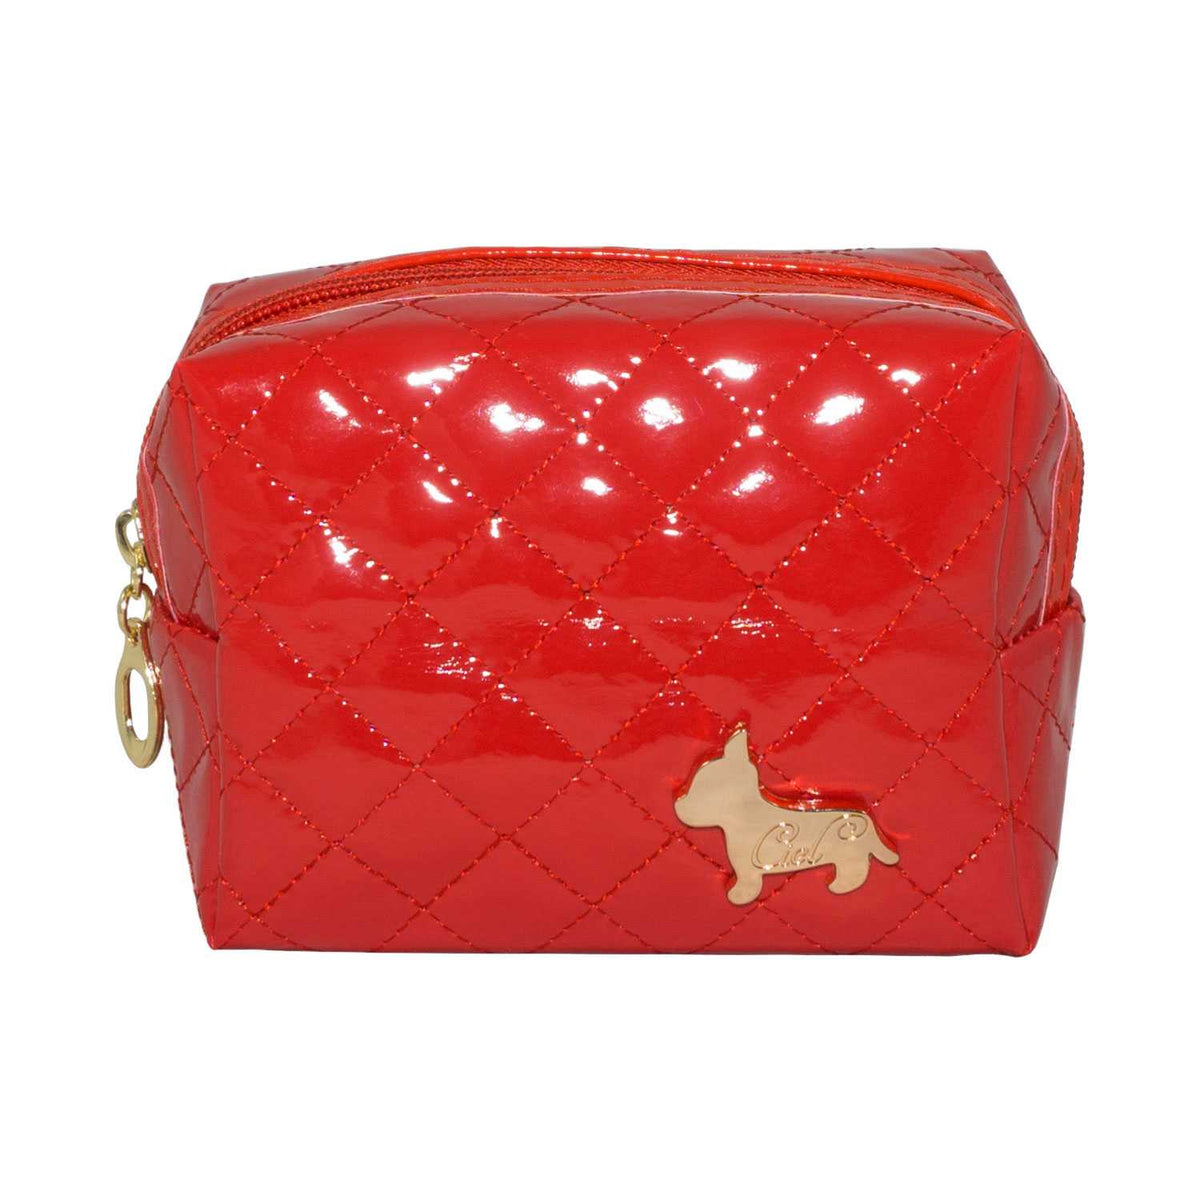 Shiny Rectangular Shape Cosmetic Pouch Bag - Red - Zestique